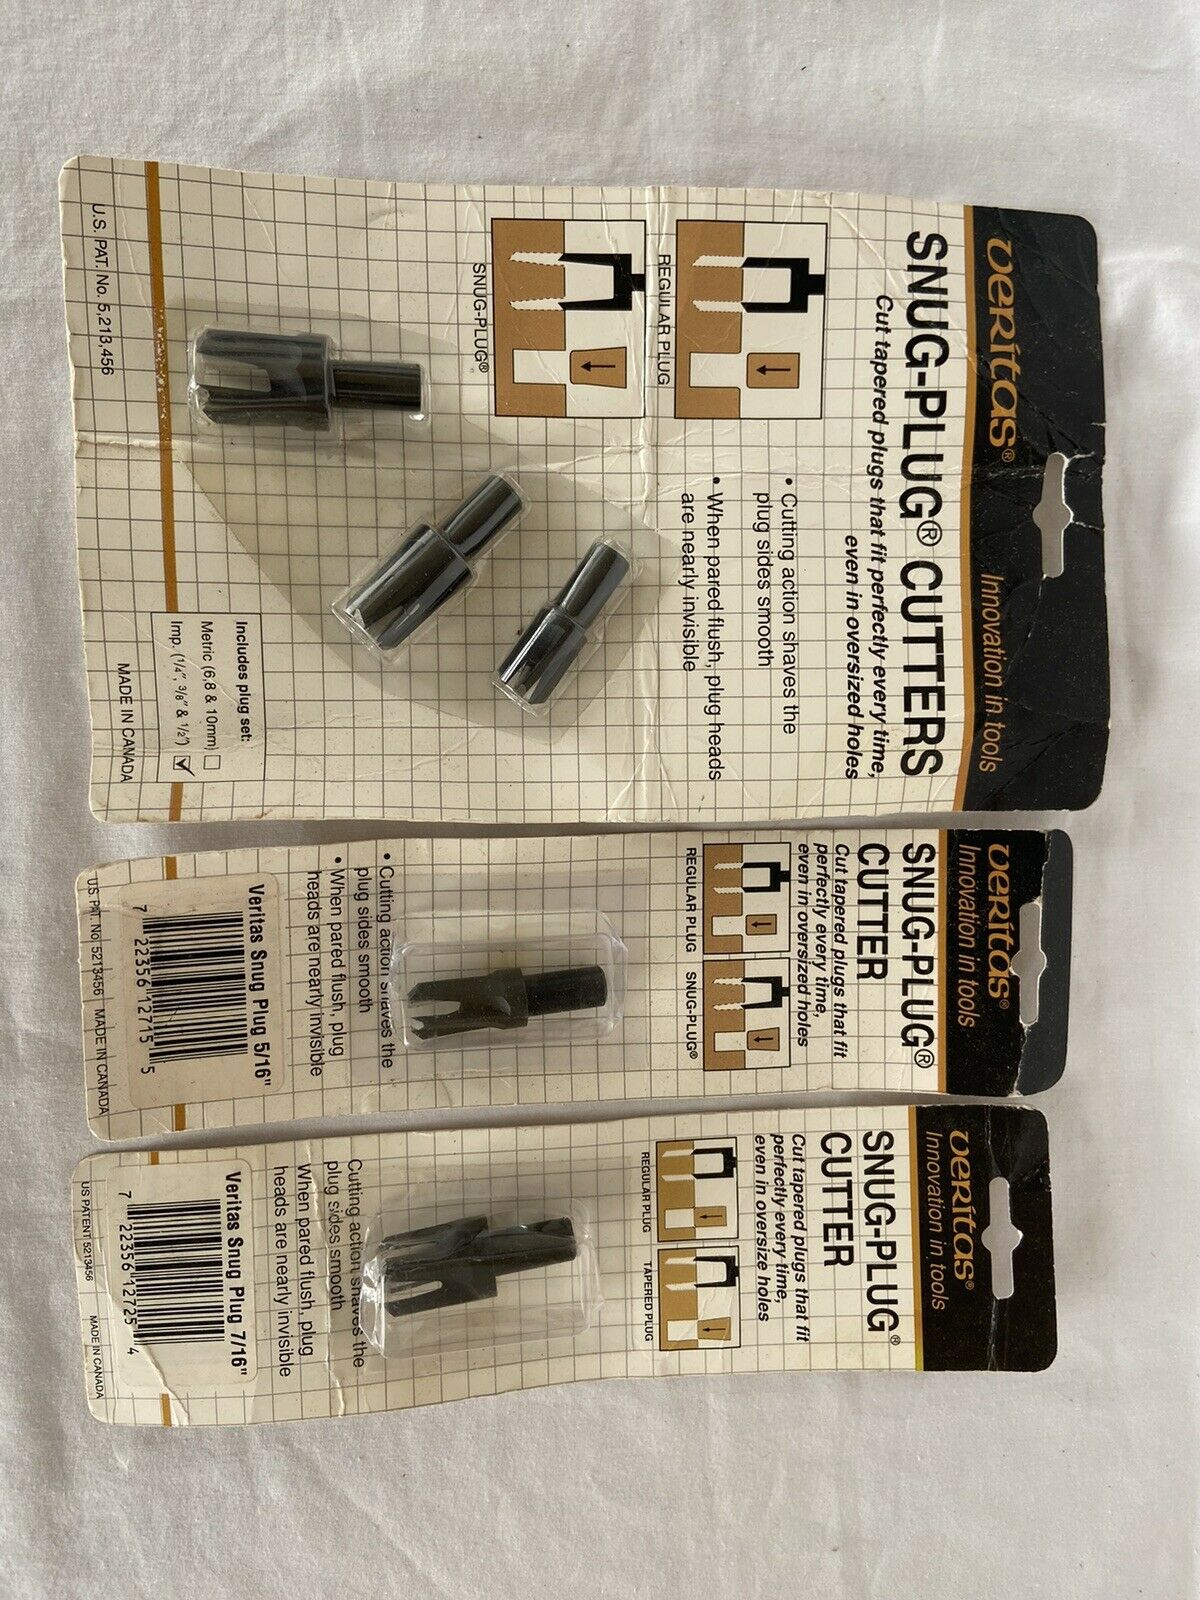 Veritas Snug-plug Plug Cutters Set Of 5 Made In Canada 1/4” 3/8” 1/2” 5/16” 7/16